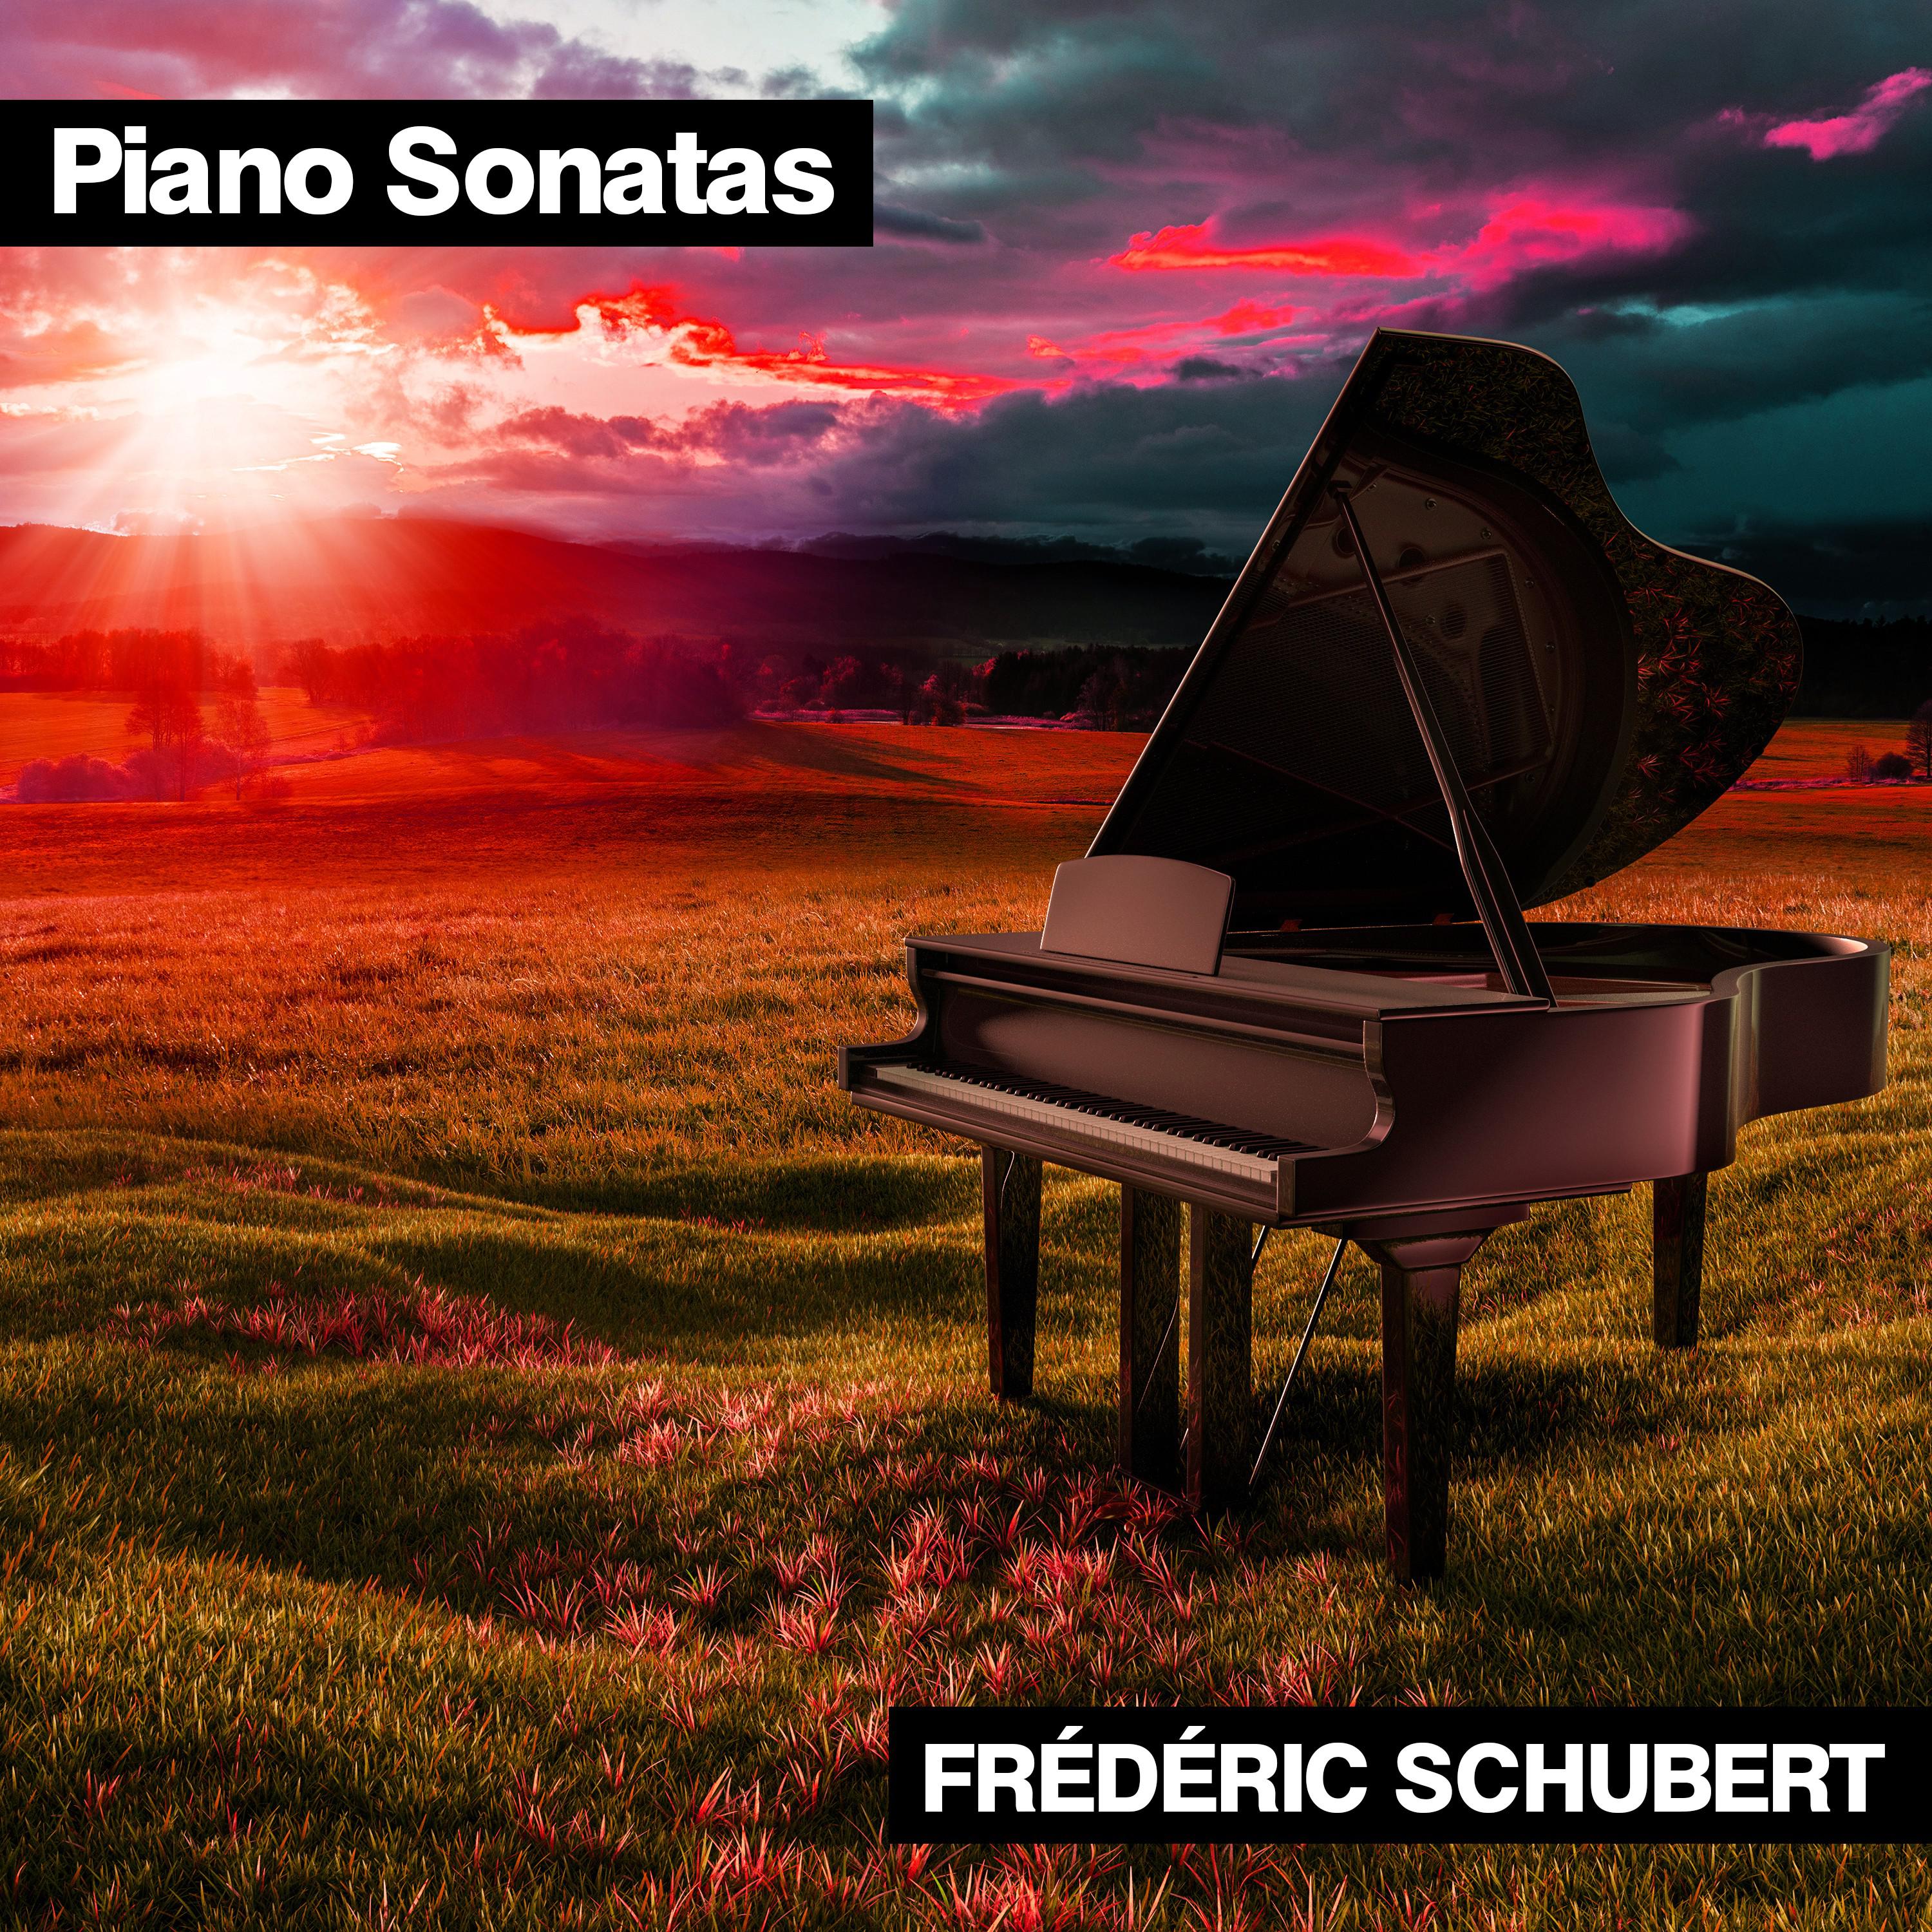 Piano Sonata No. 14 in C-Sharp Minor, Op. 27 No. 2 "Moonlight Sonata": I. Adagio Sostenuto